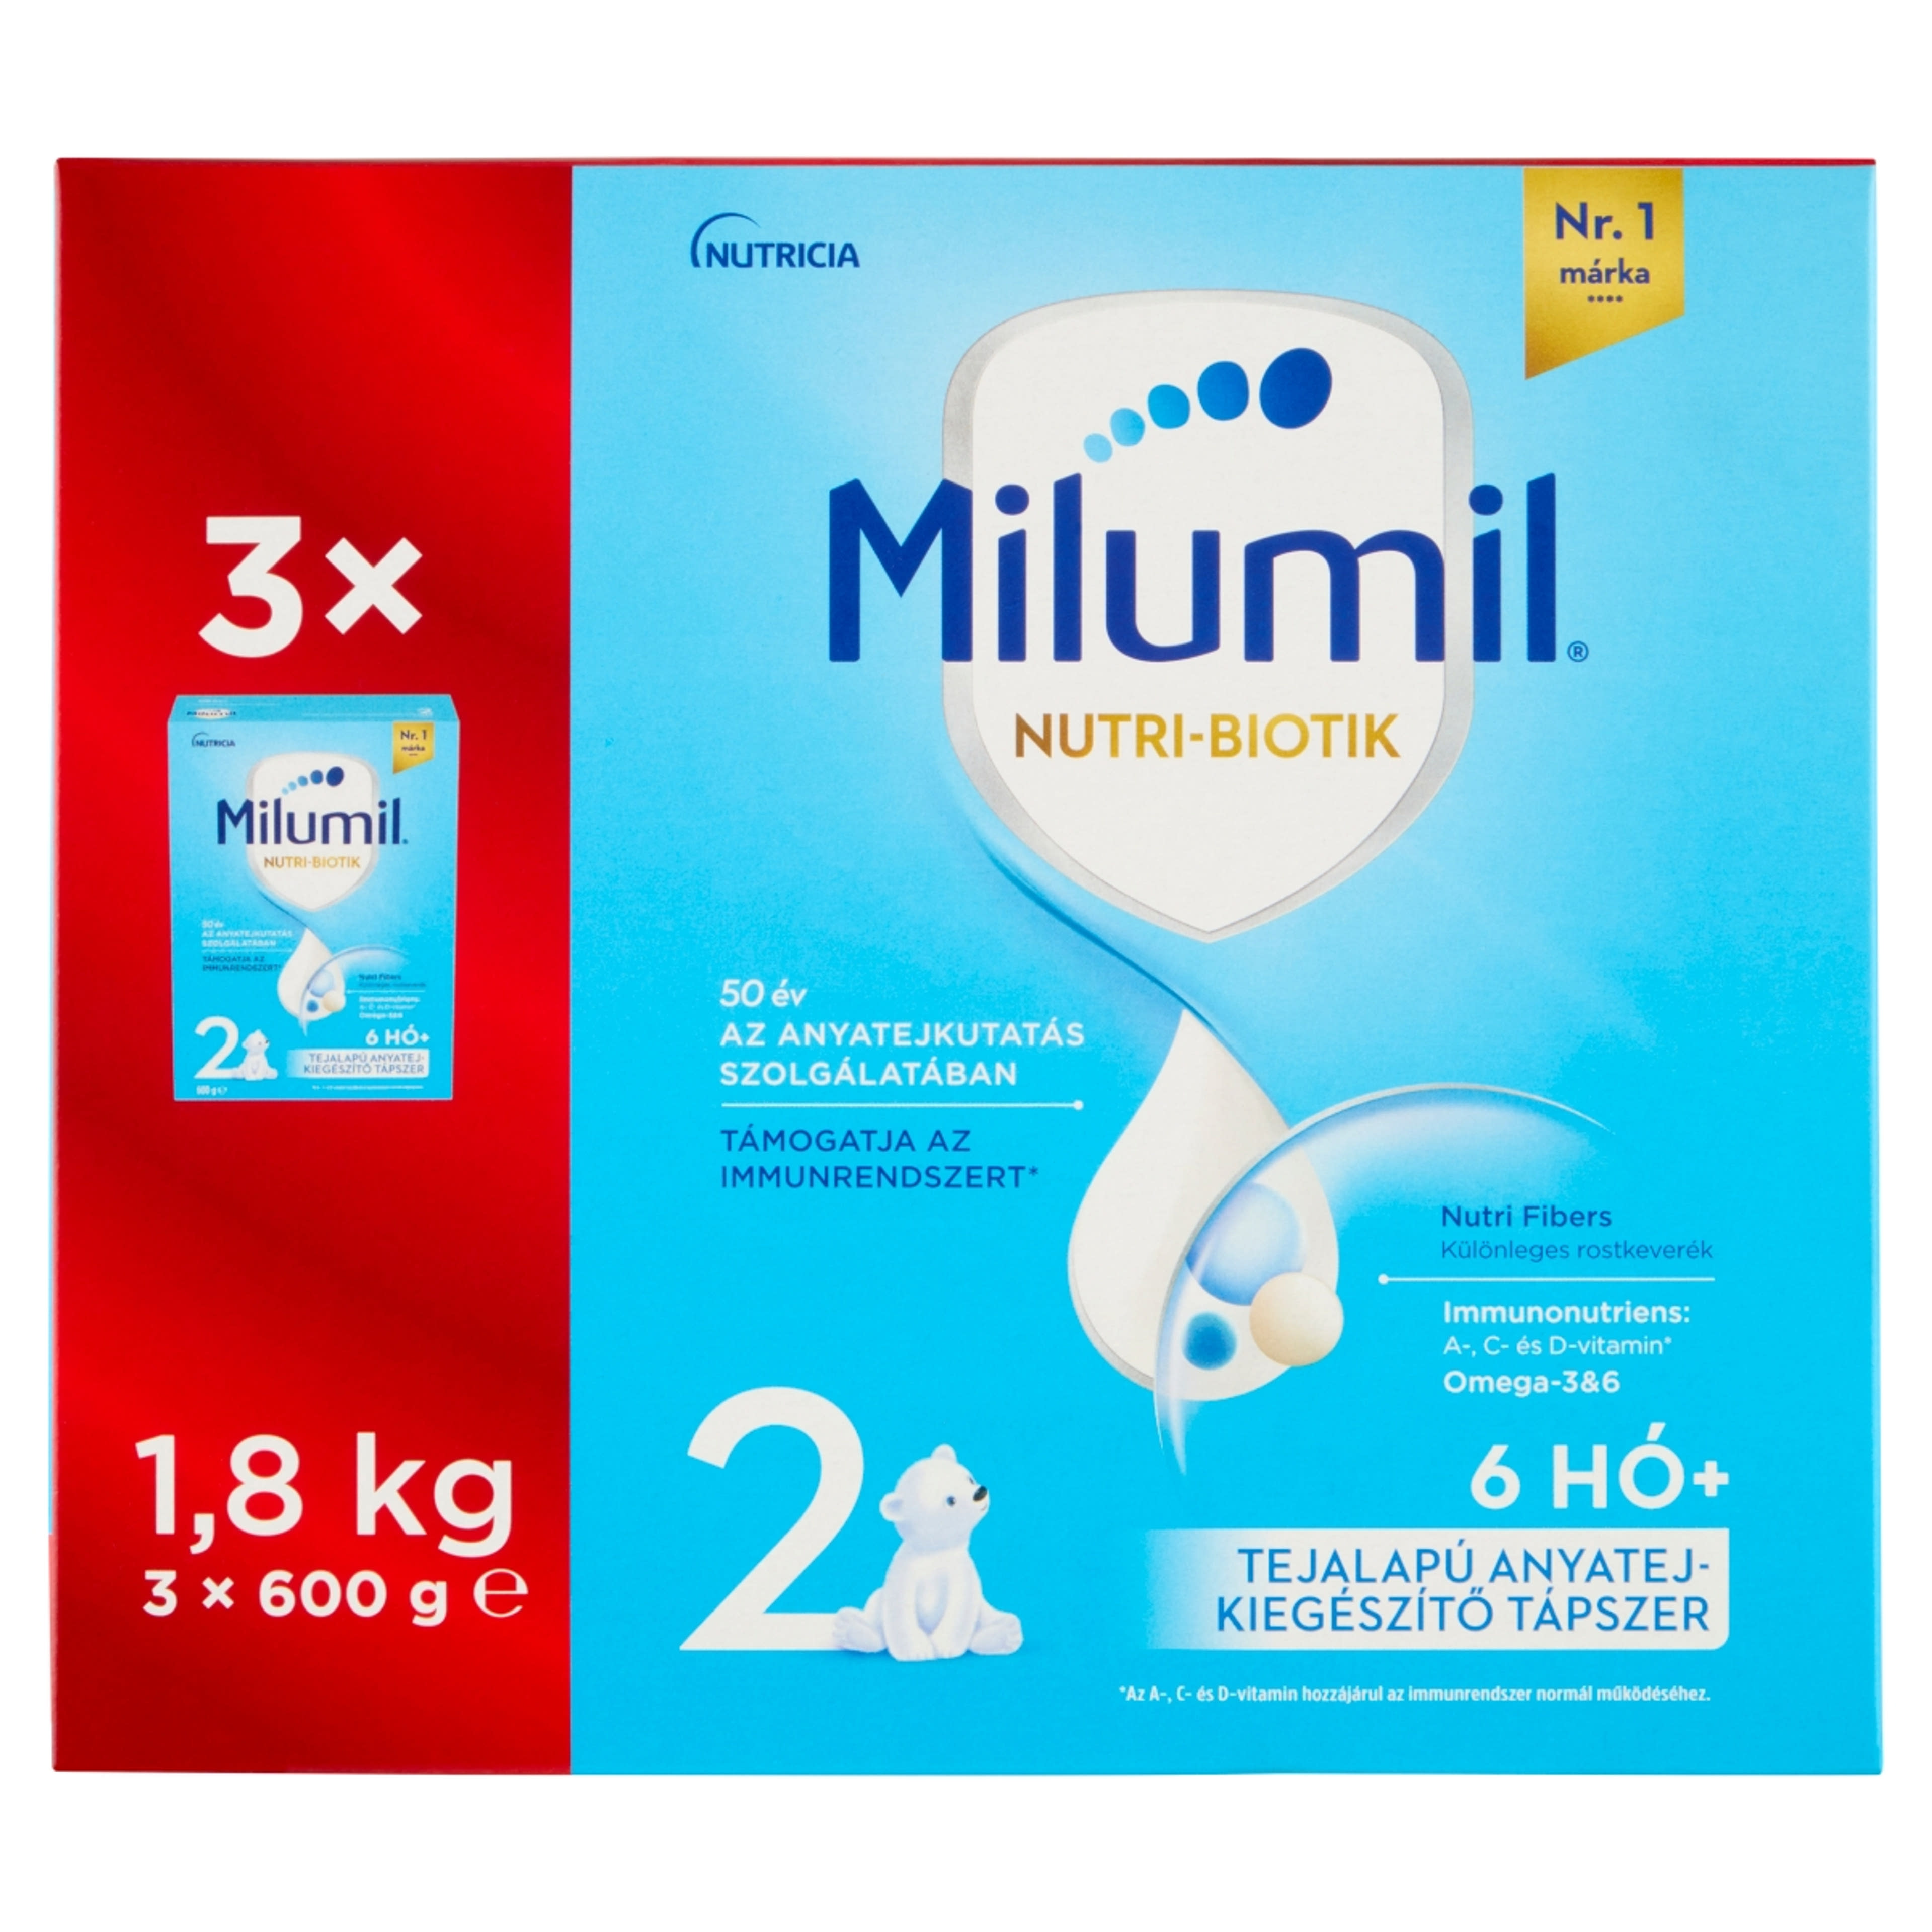 Milumil Nutri-Biotik 2 tejalapú anyatej-kiegészítő tápszer 6 hónapos kortól - 1958 g